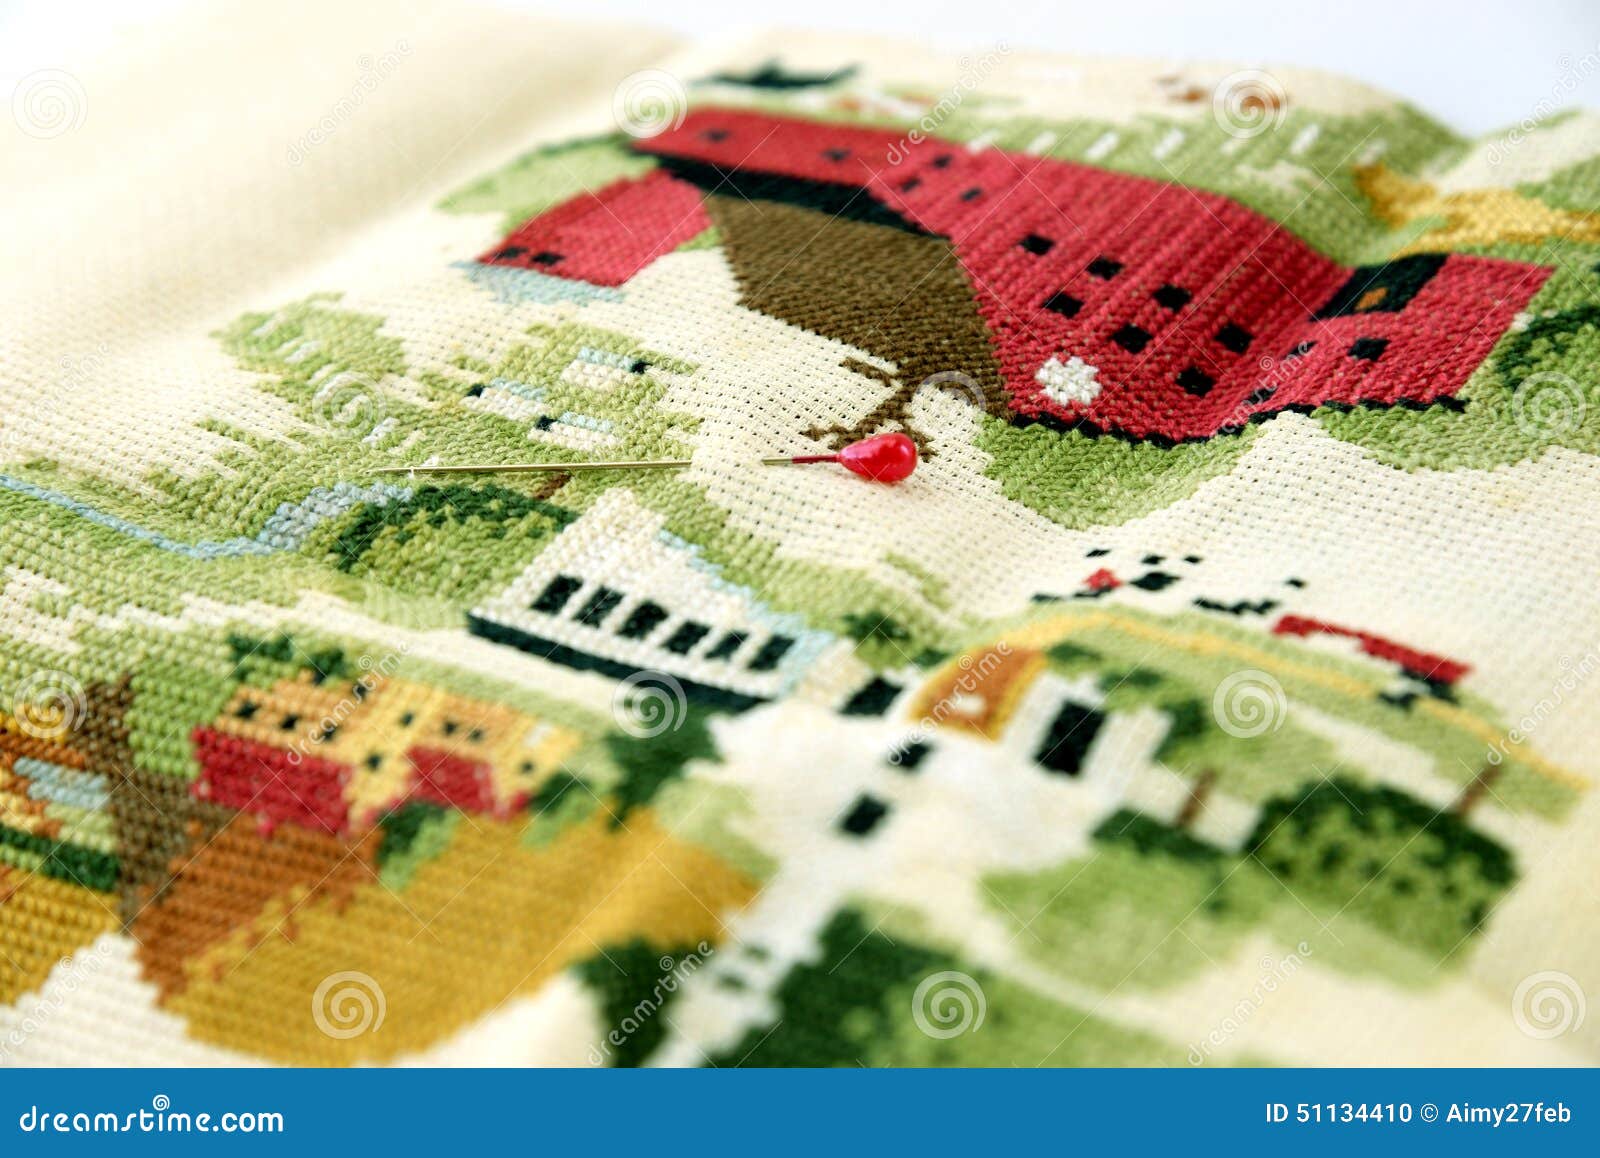 Closeup of Needle Put into Cross-stitch Embroidery Stock Photo - Image ...